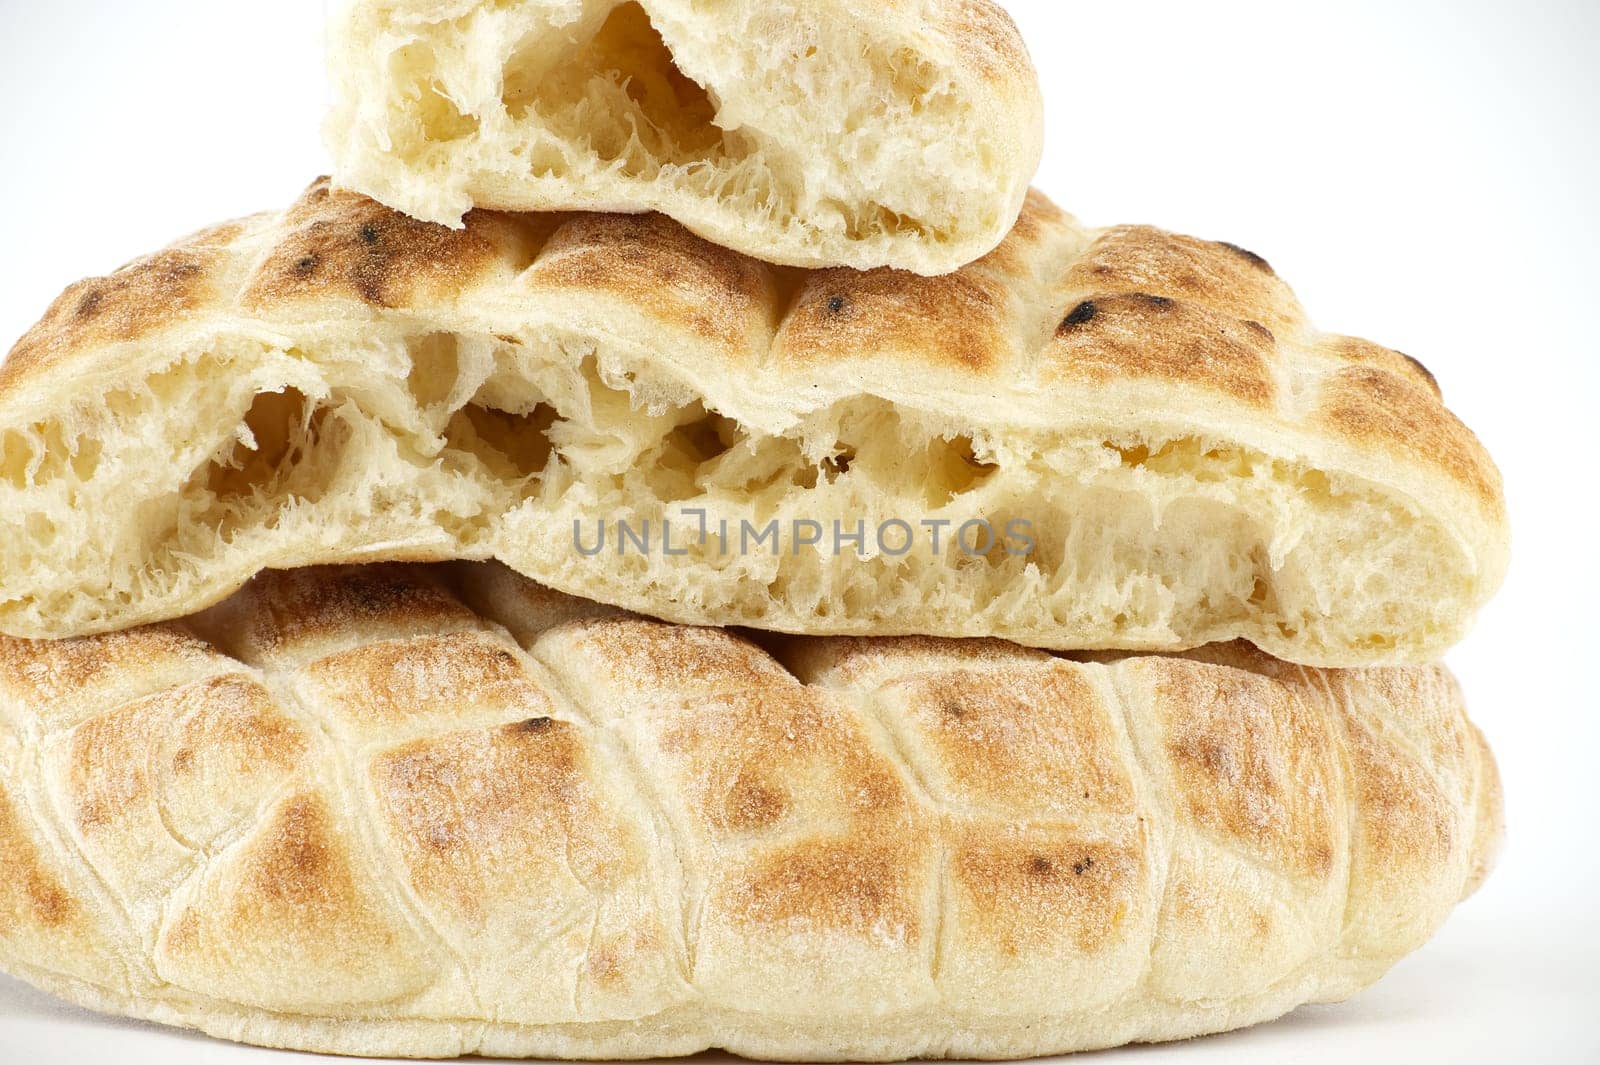 Round pita flat-bread on a white background by NetPix